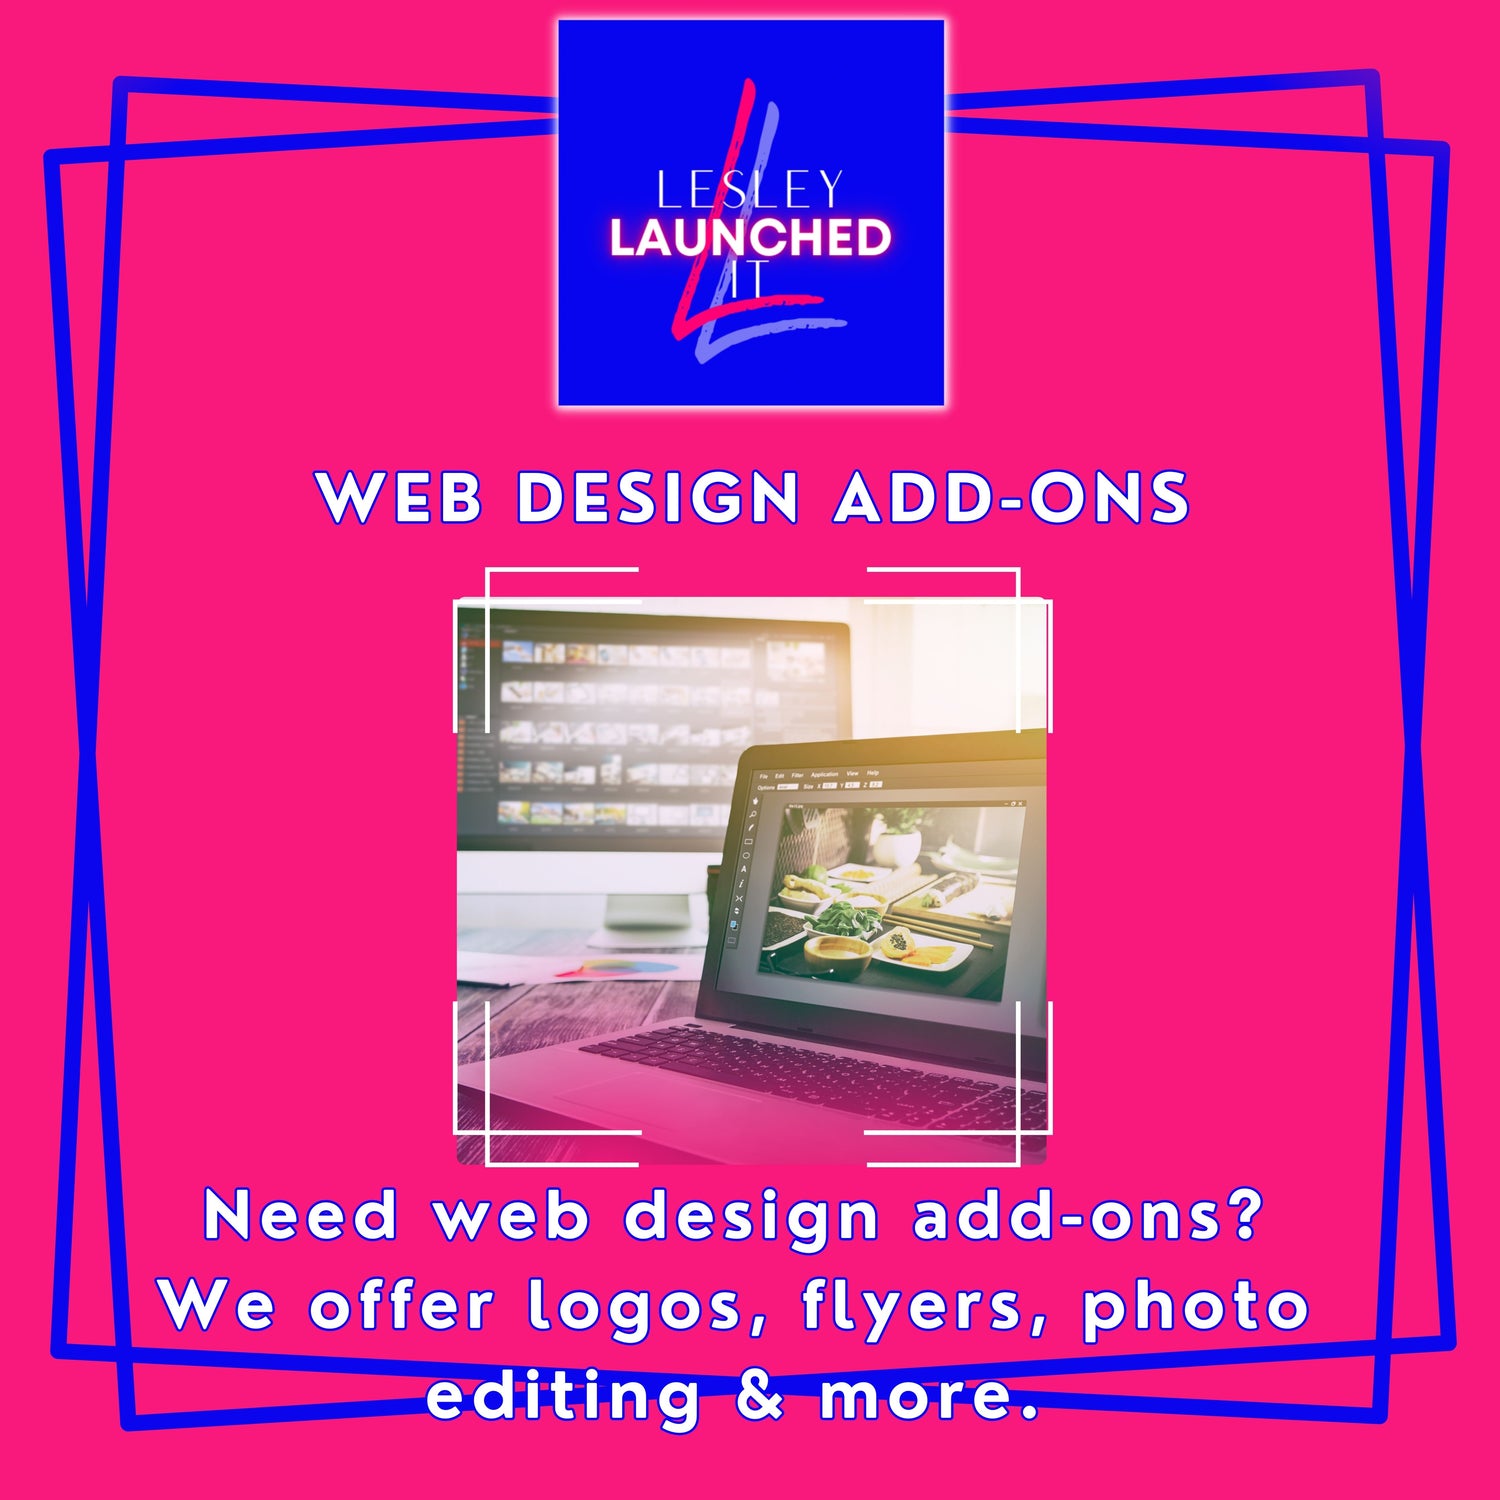 Web Design Add-Ons